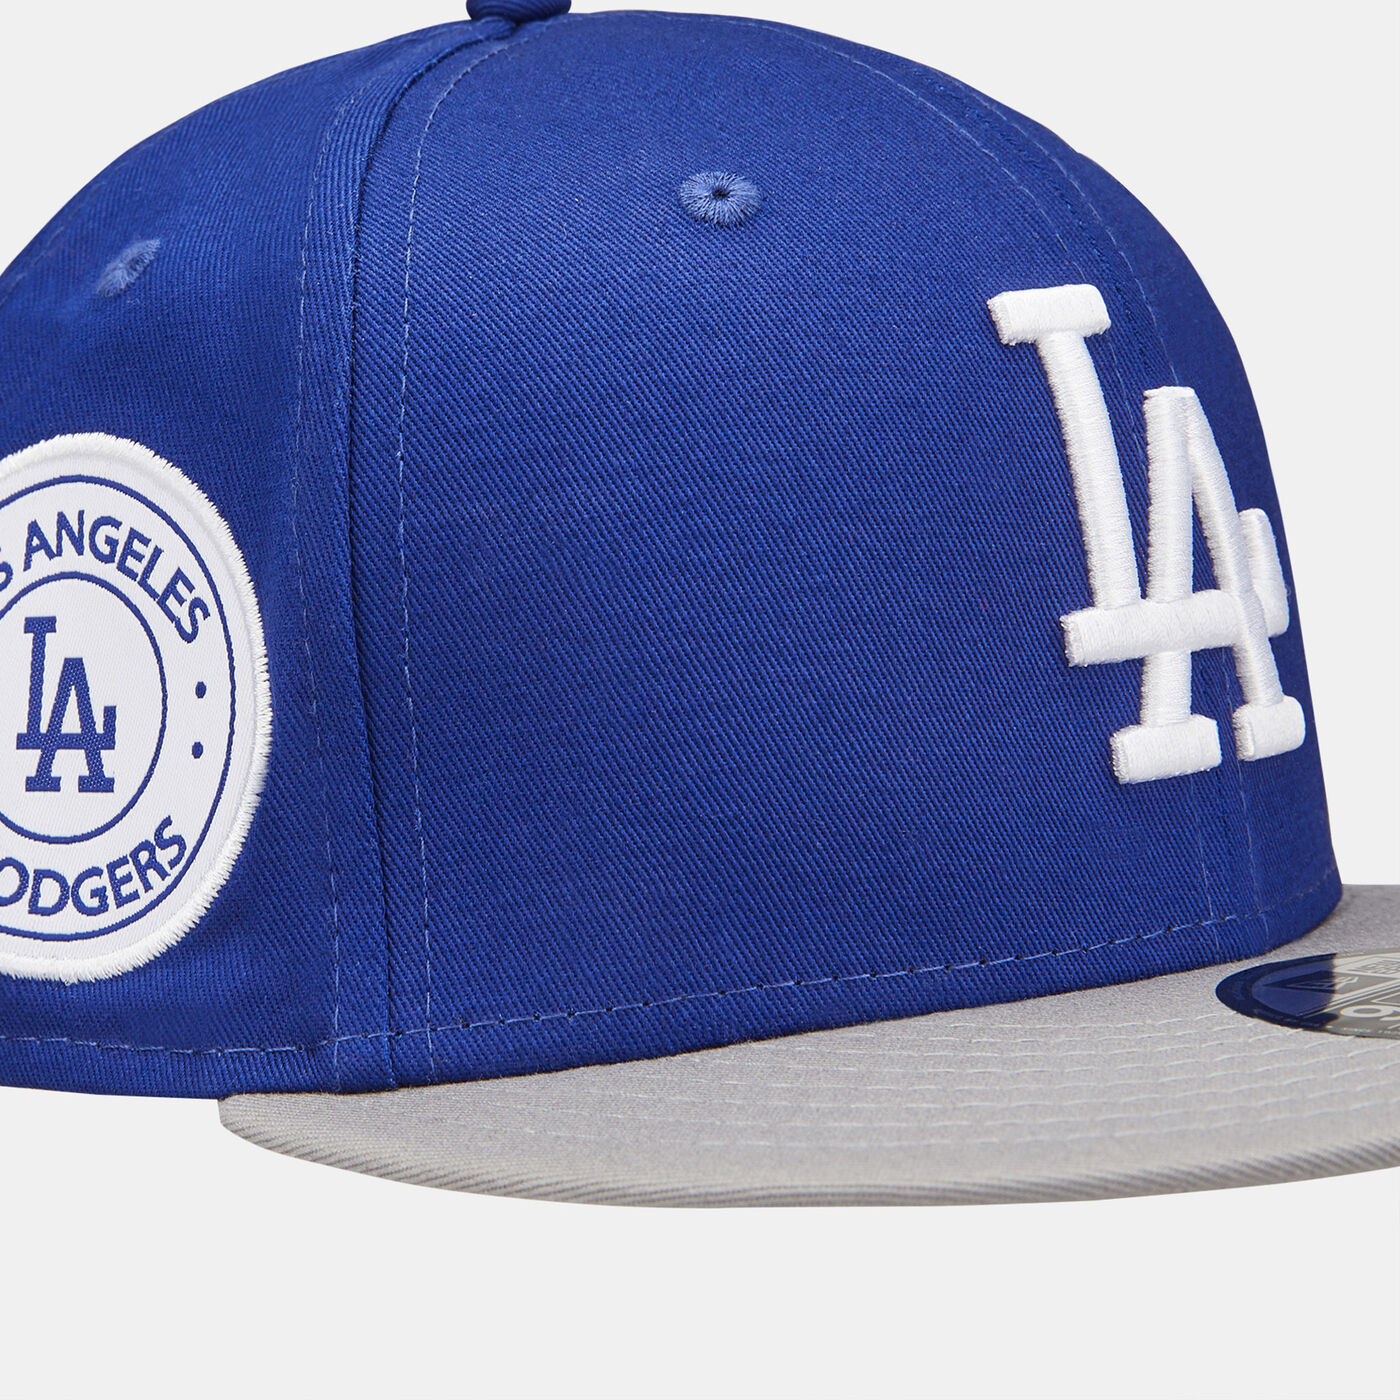 Men's Los Angeles Dodgers Side Patch 9FIFTY Cap